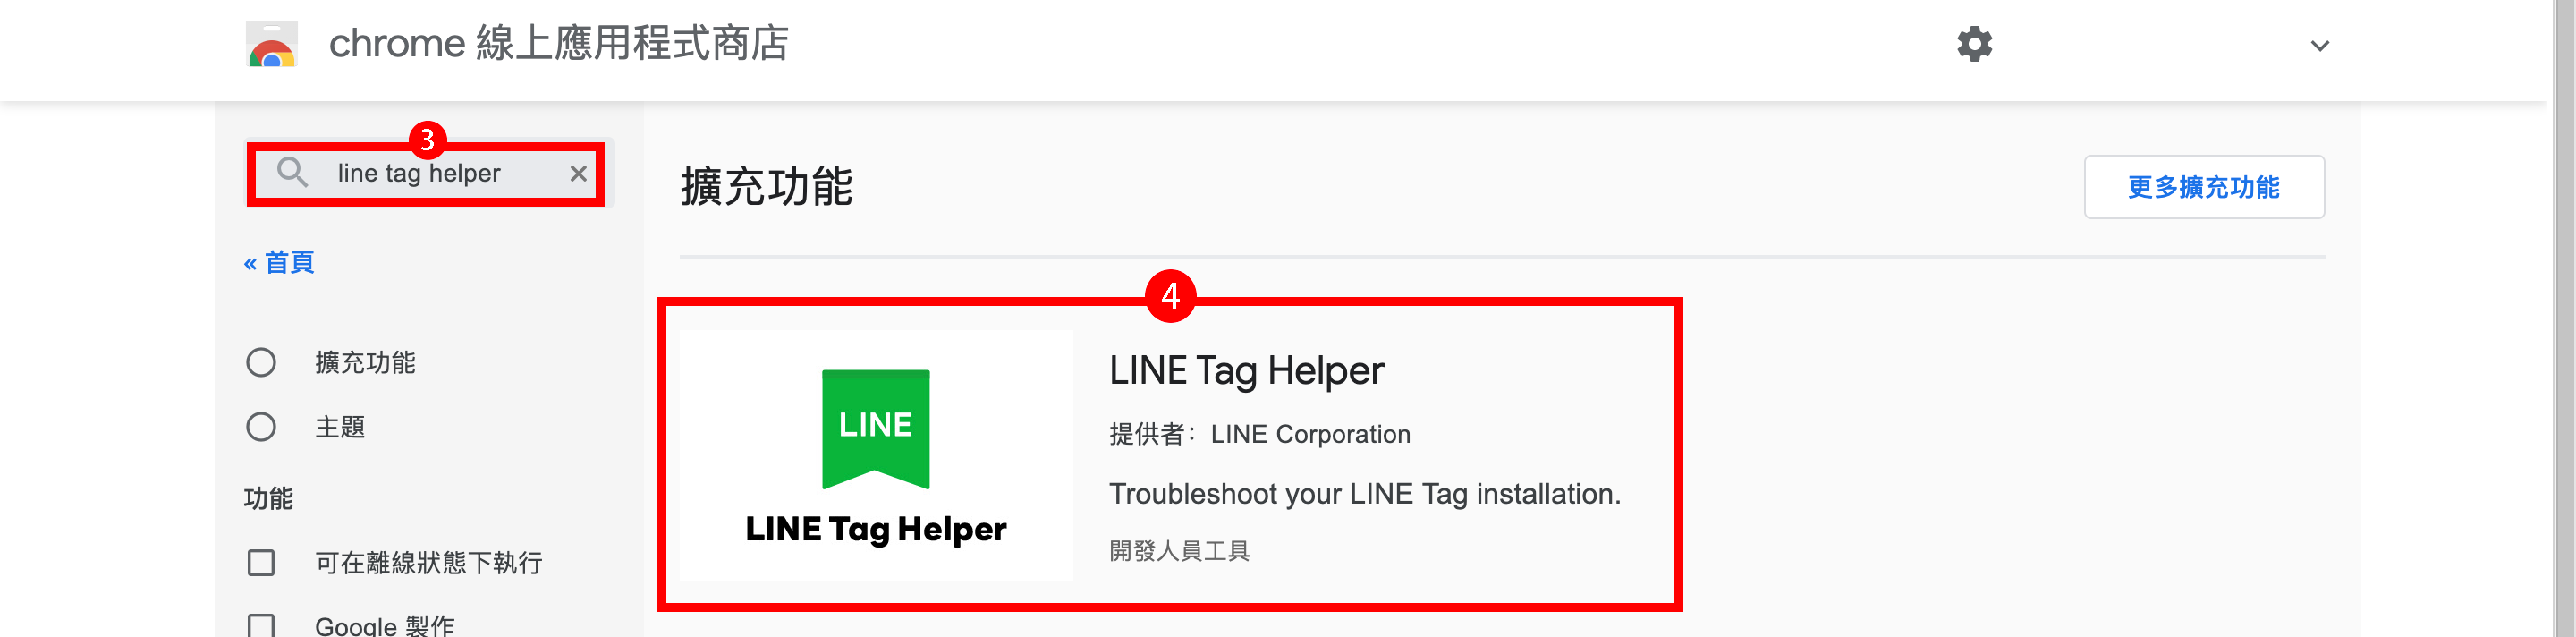 LINE Tag Helper 如何安裝？
搜尋「LINE Tag Helper」並點選